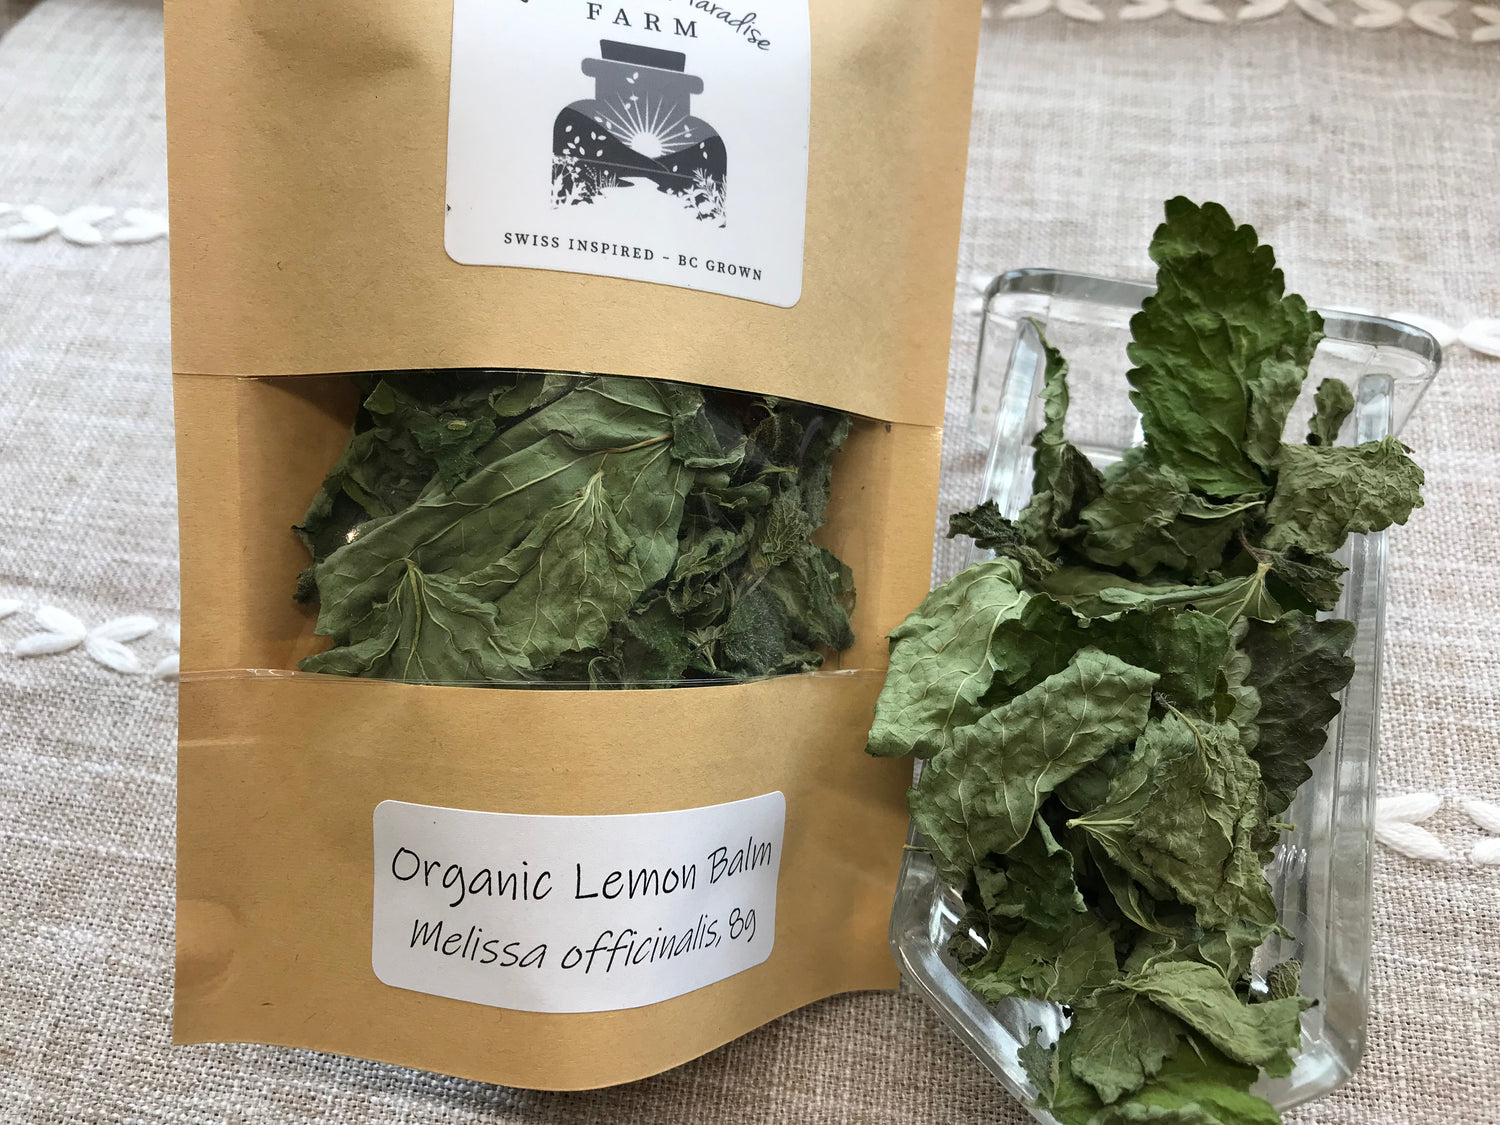 Organic herbal medicine